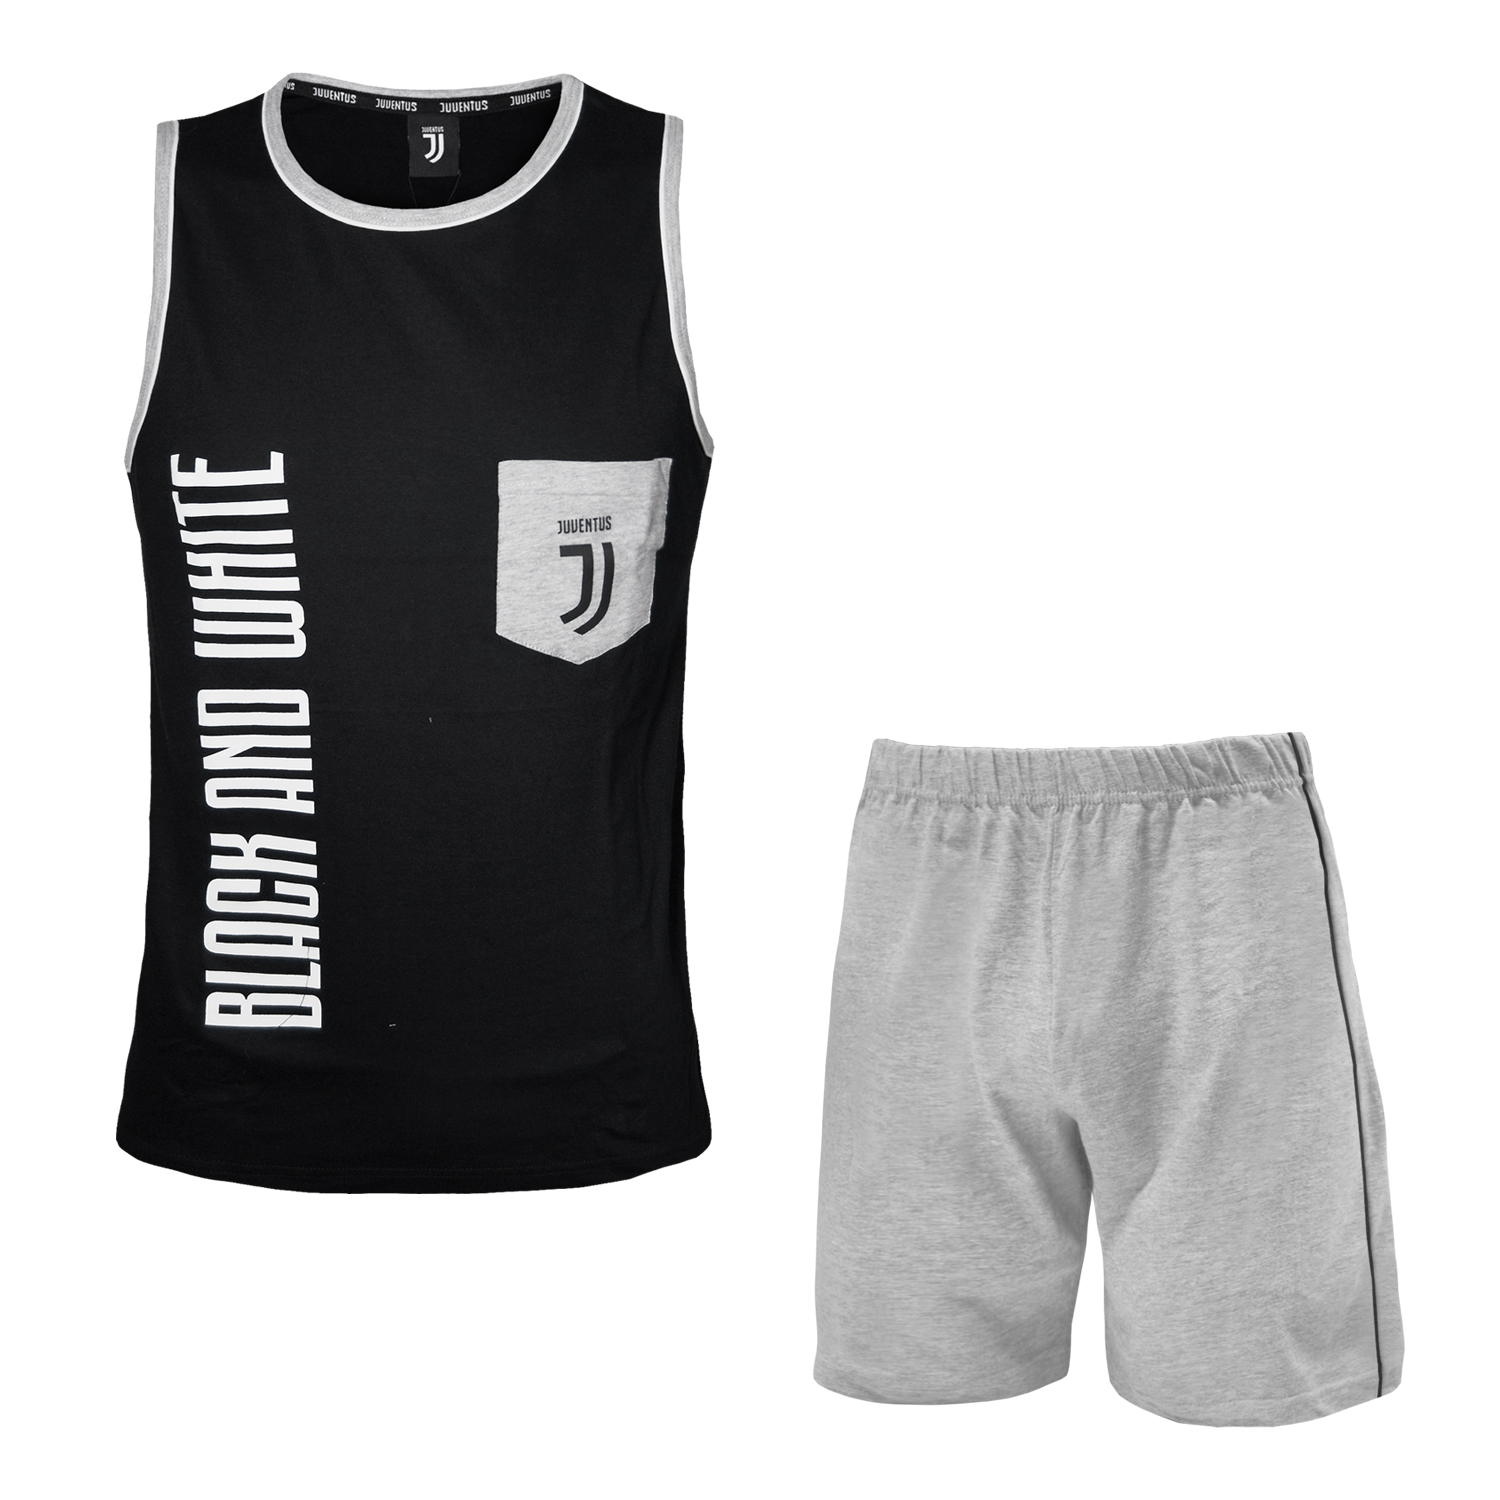 Visita lo Store di JuventusPLANETEX Pigiama Homewear Uomo Juventus Prodotto Ufficiale Cotone Art.14076 Black - S / 46 